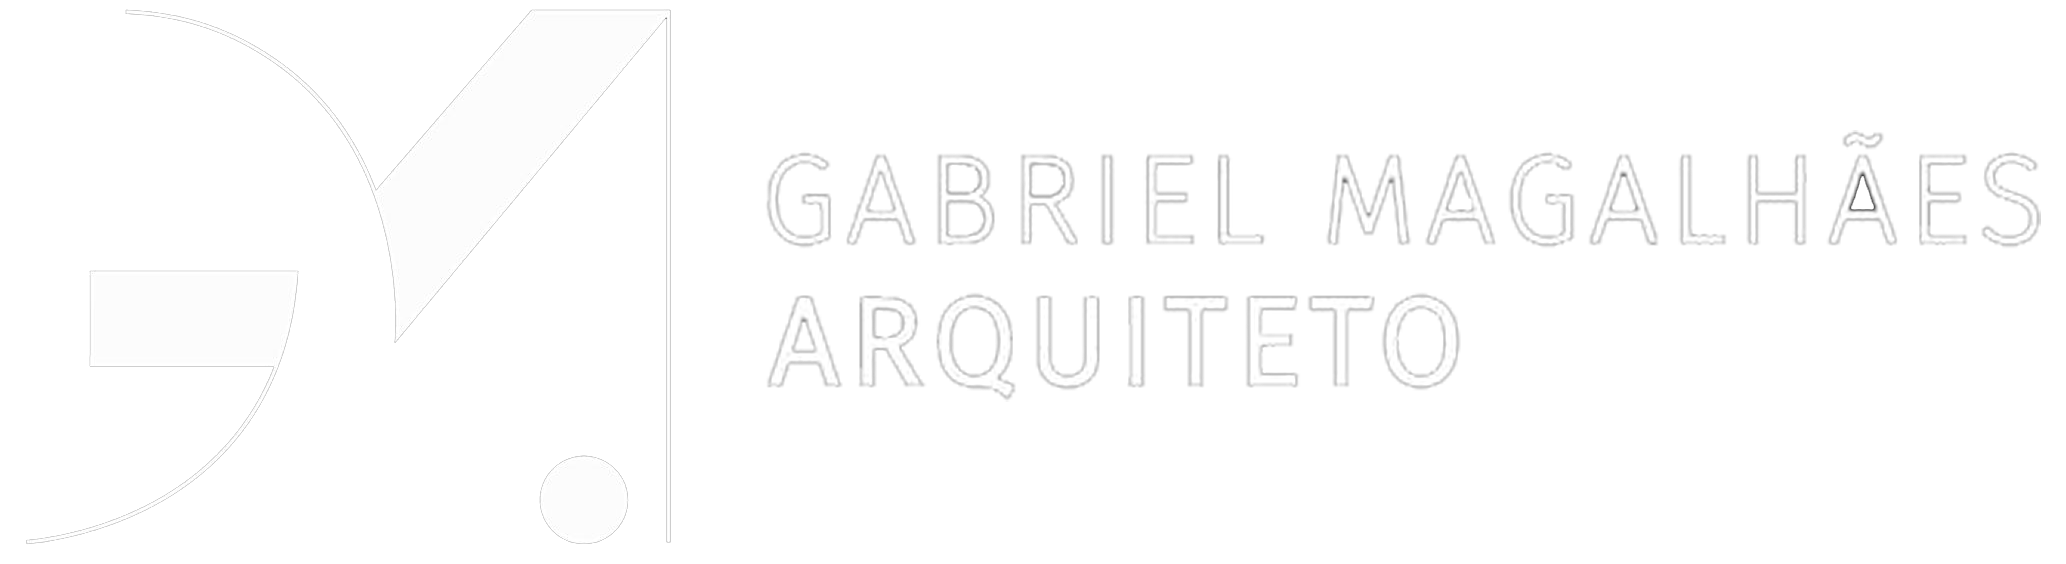 Gabriel Magalhães Arquiteto